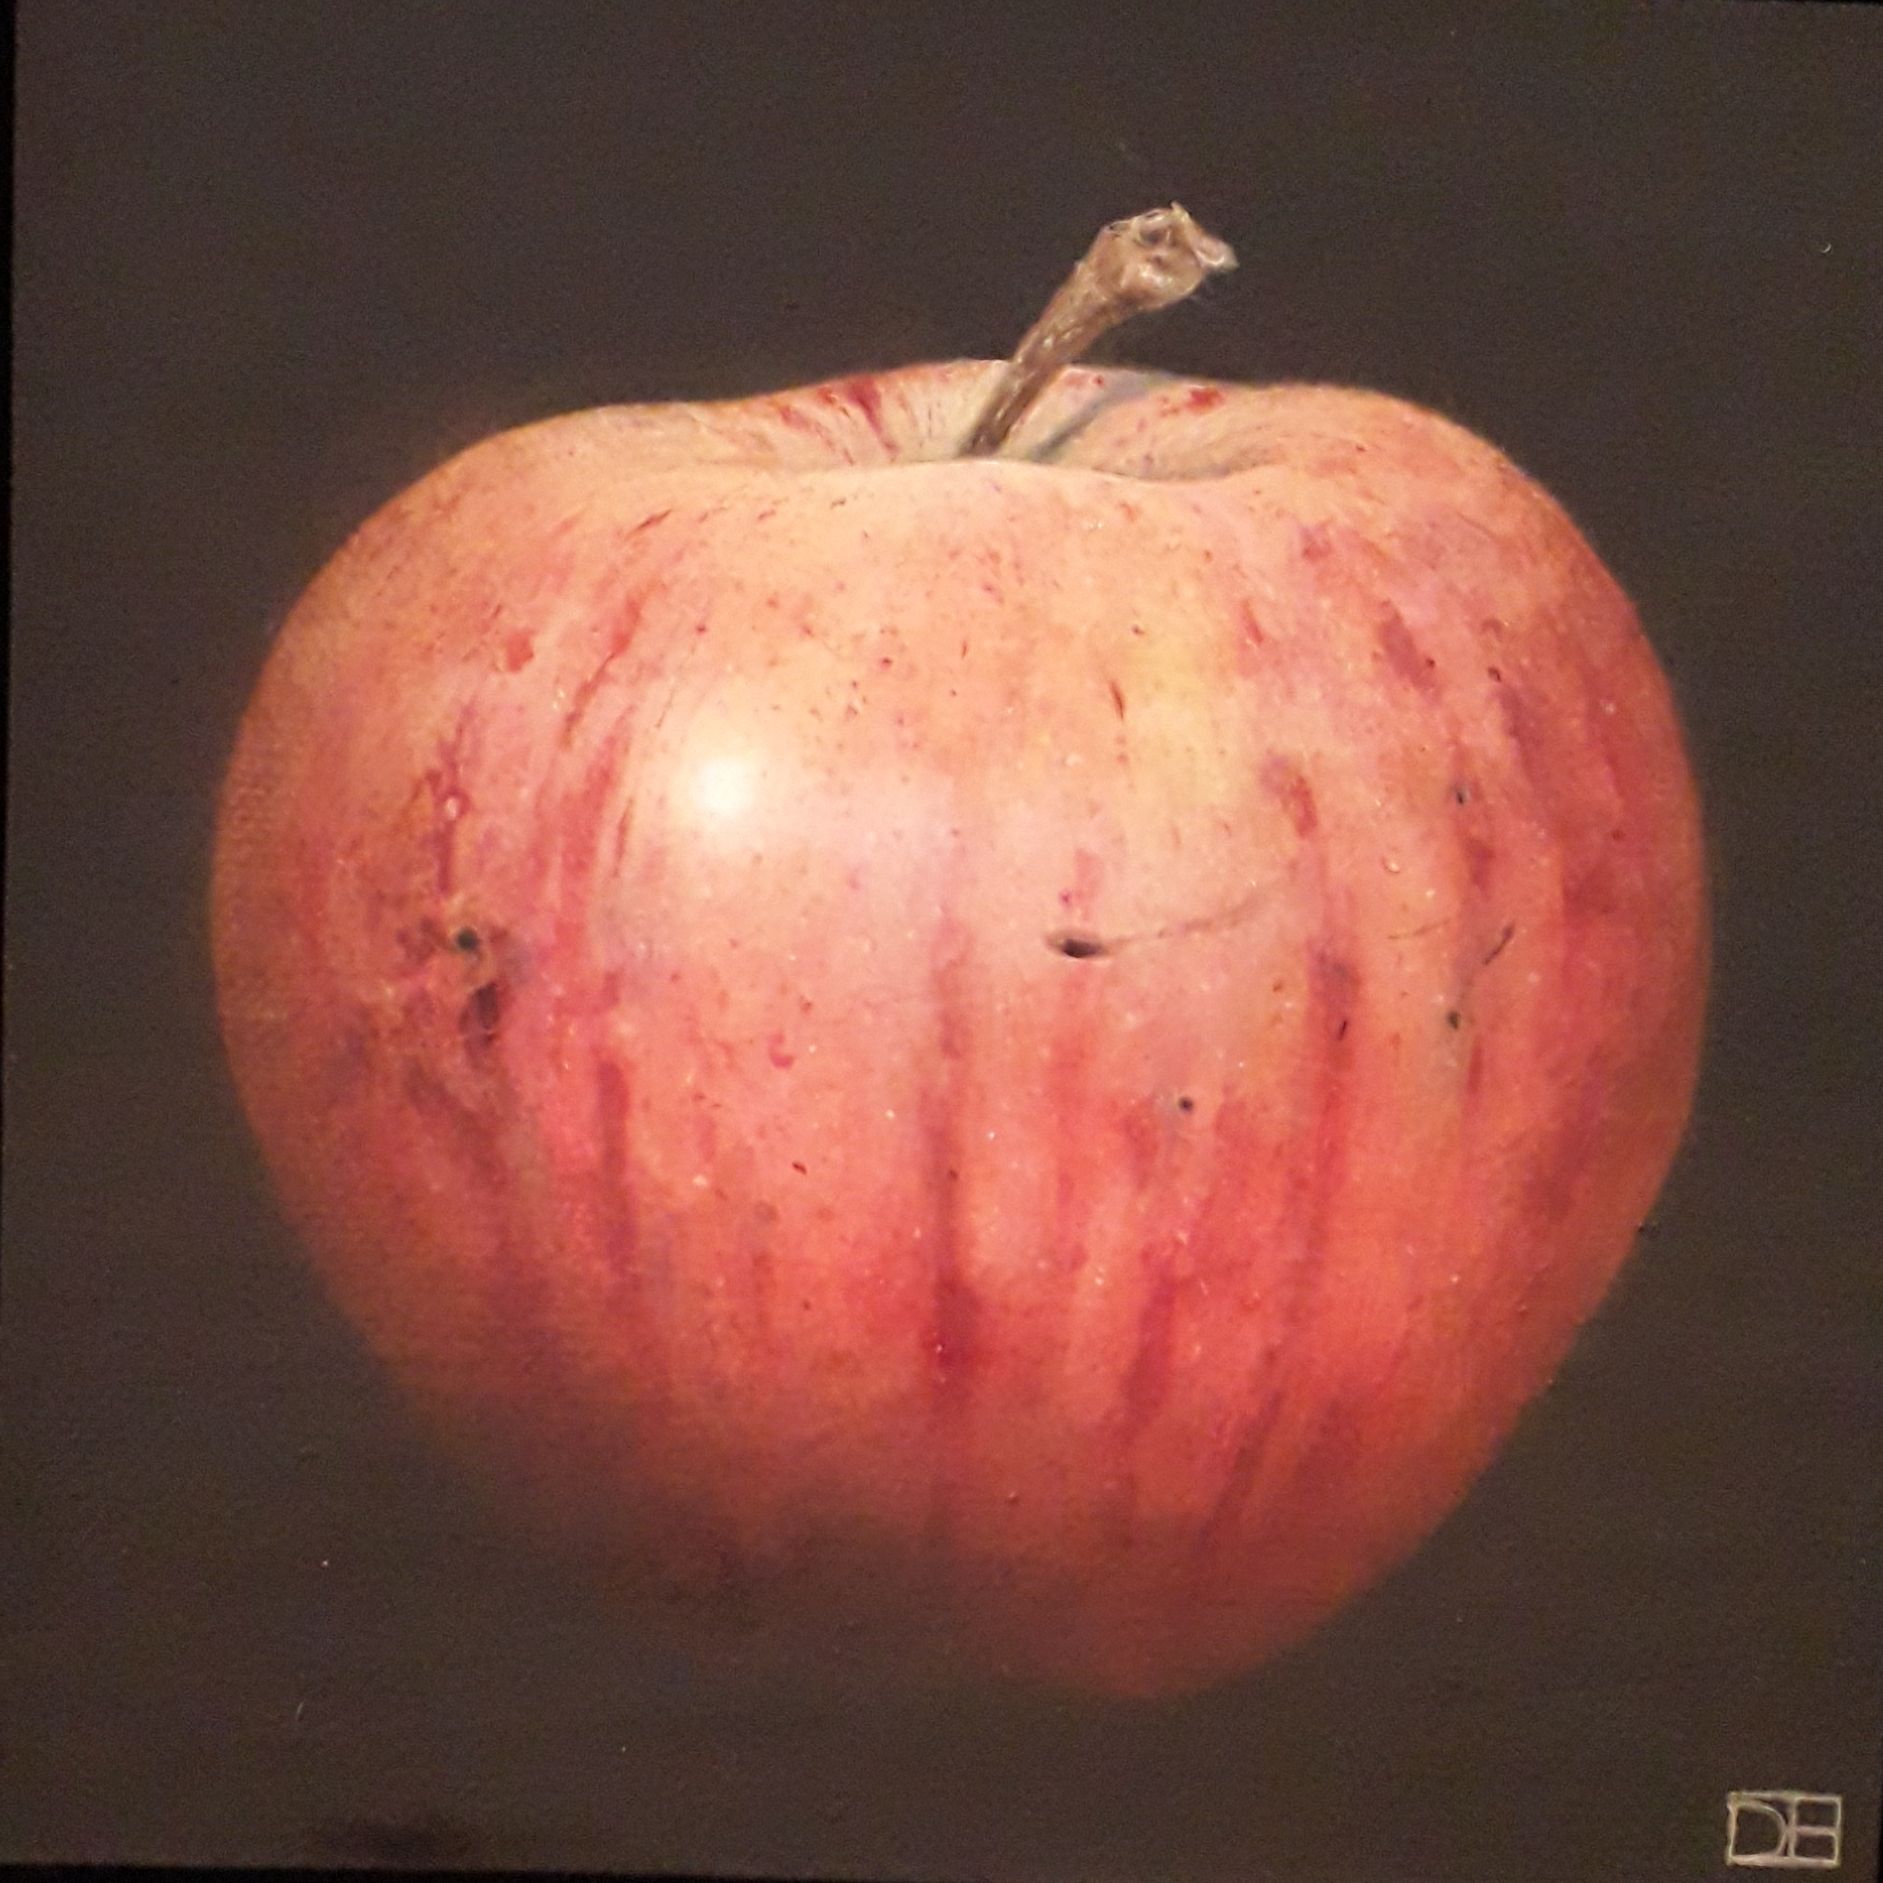 Stripey Apple by Dani Humberstone